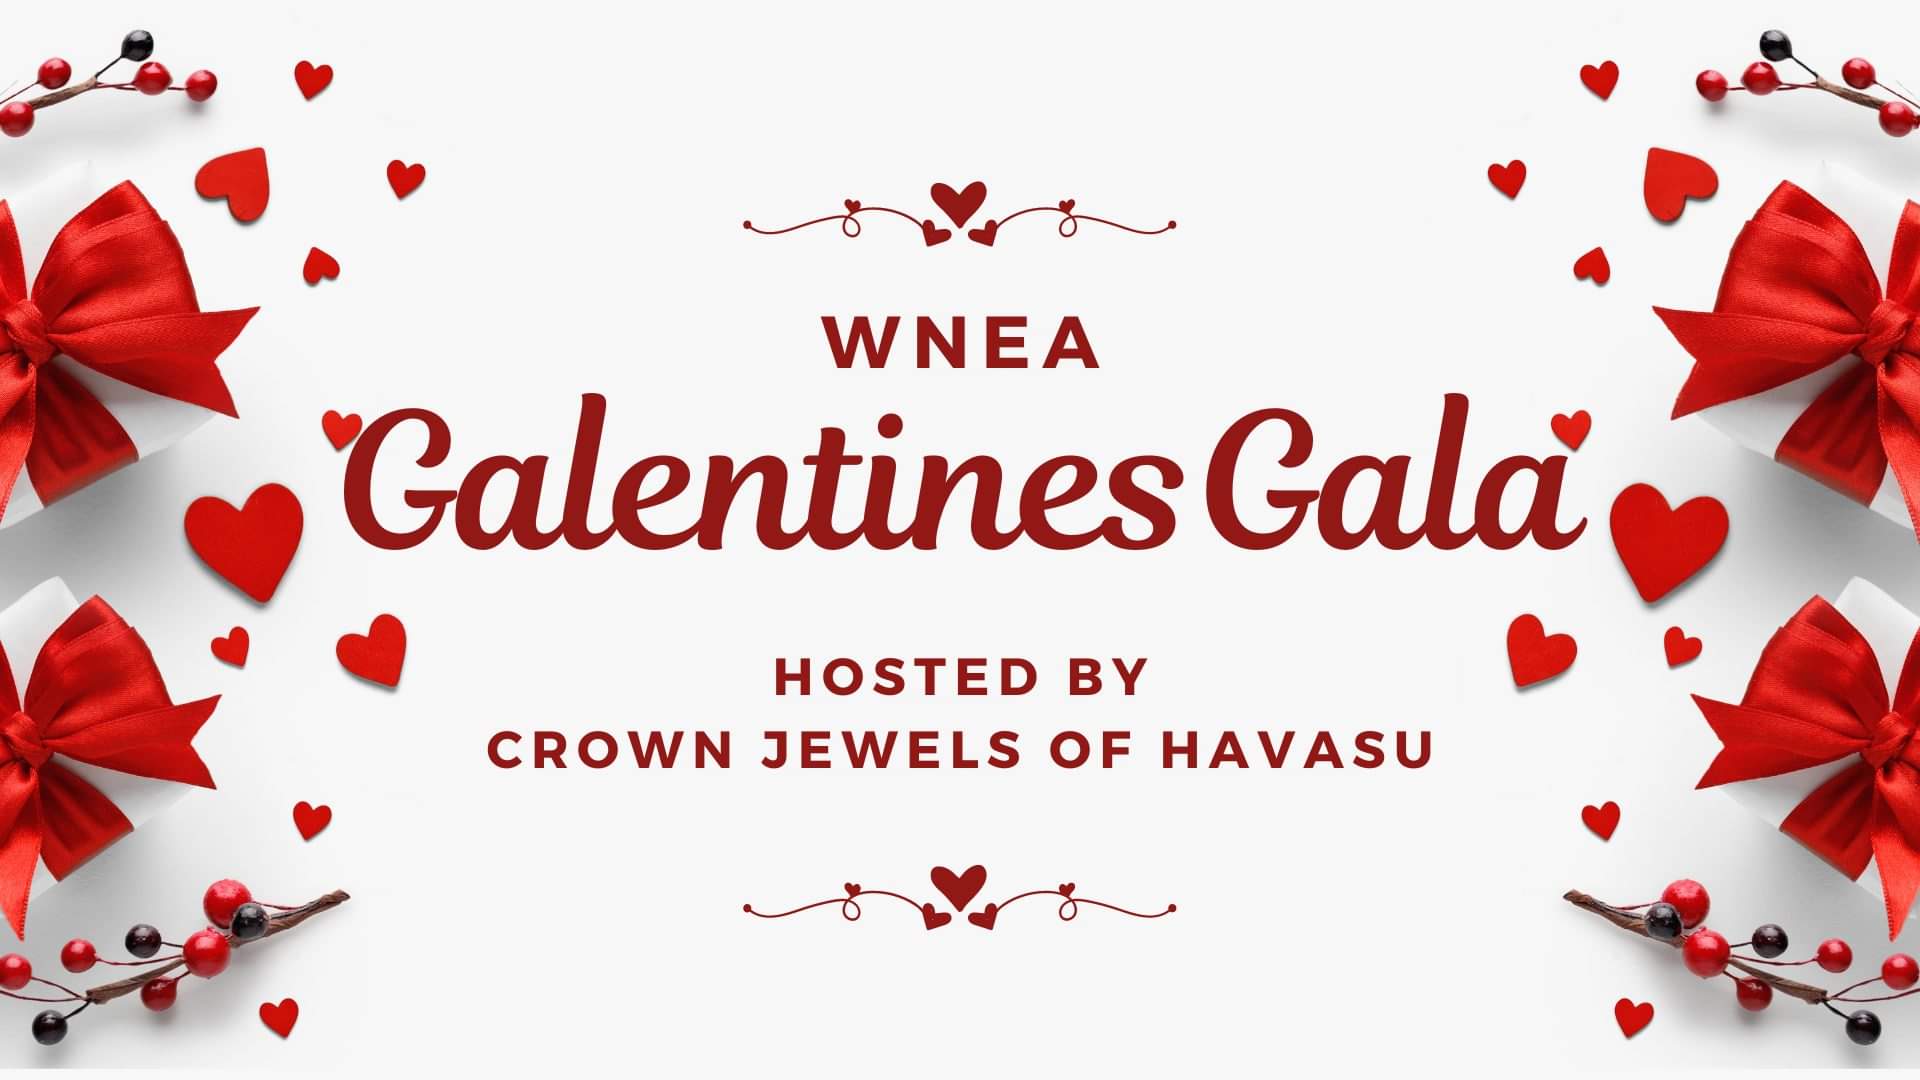 WNEA & Crown Jewels Of Havasu  Galentines Gala